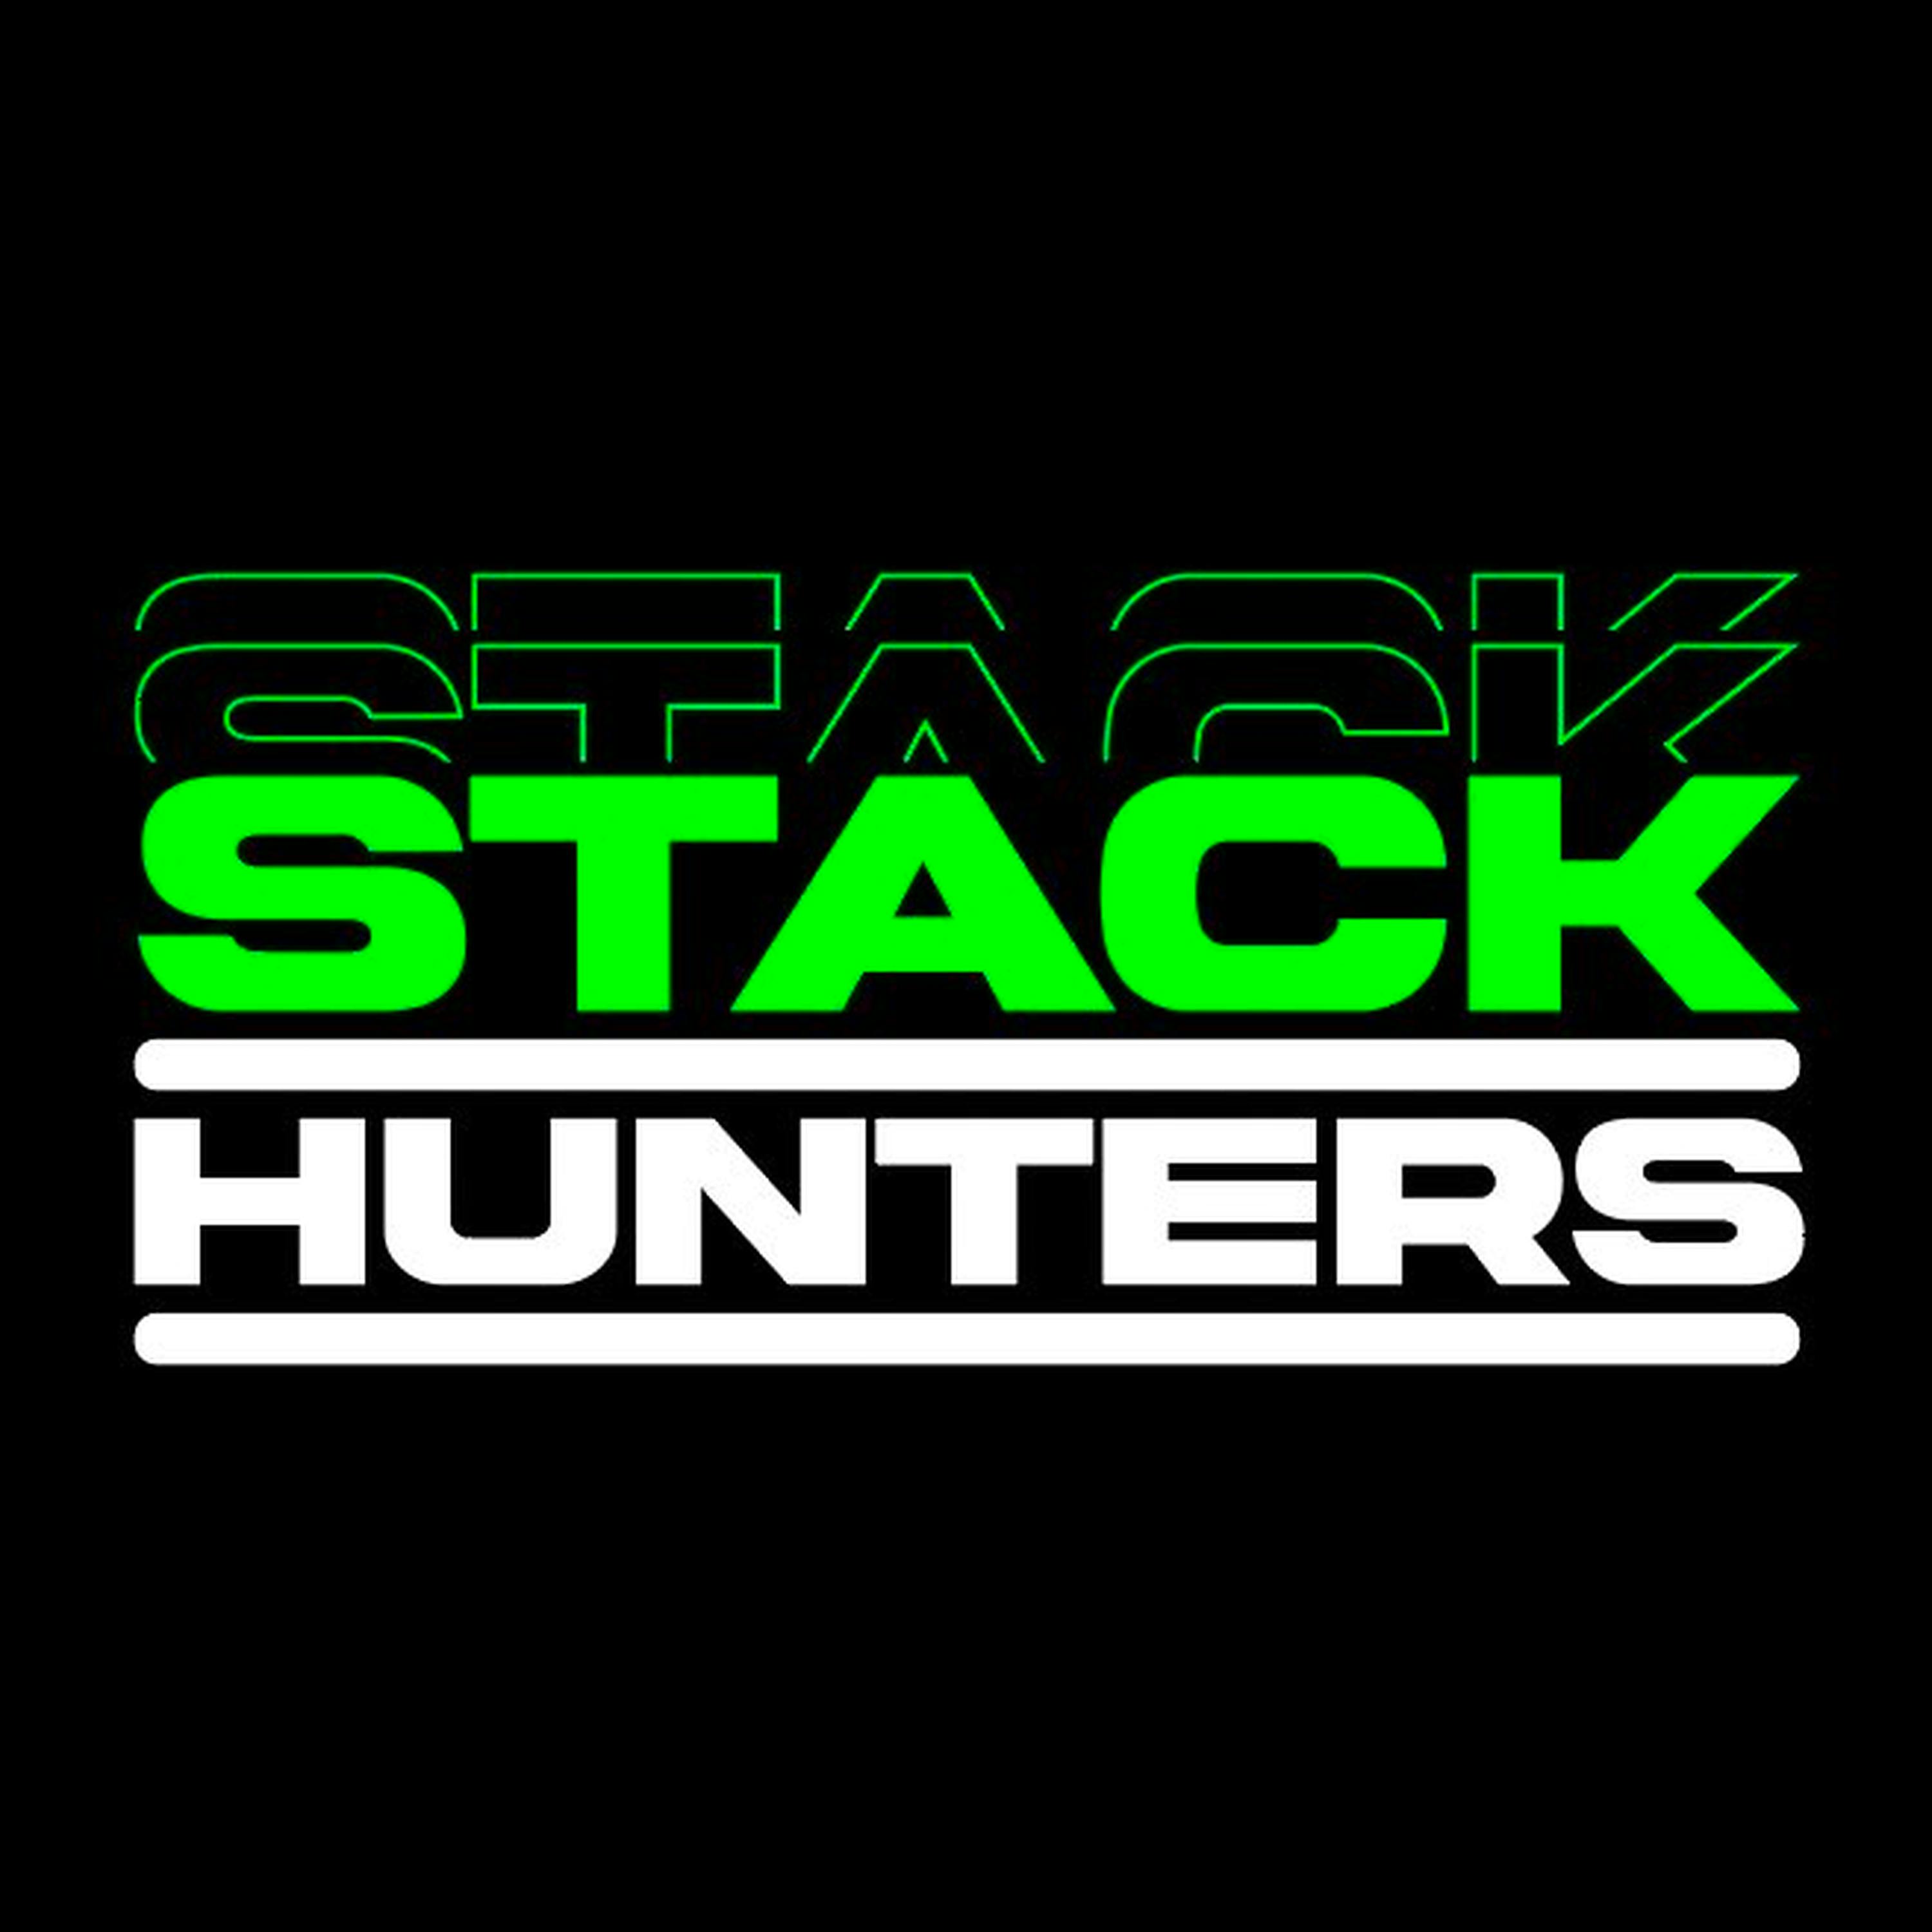 Stack Hunters - Kyle Pitts, Evan Engram and Brock Bowers: TE League Winners